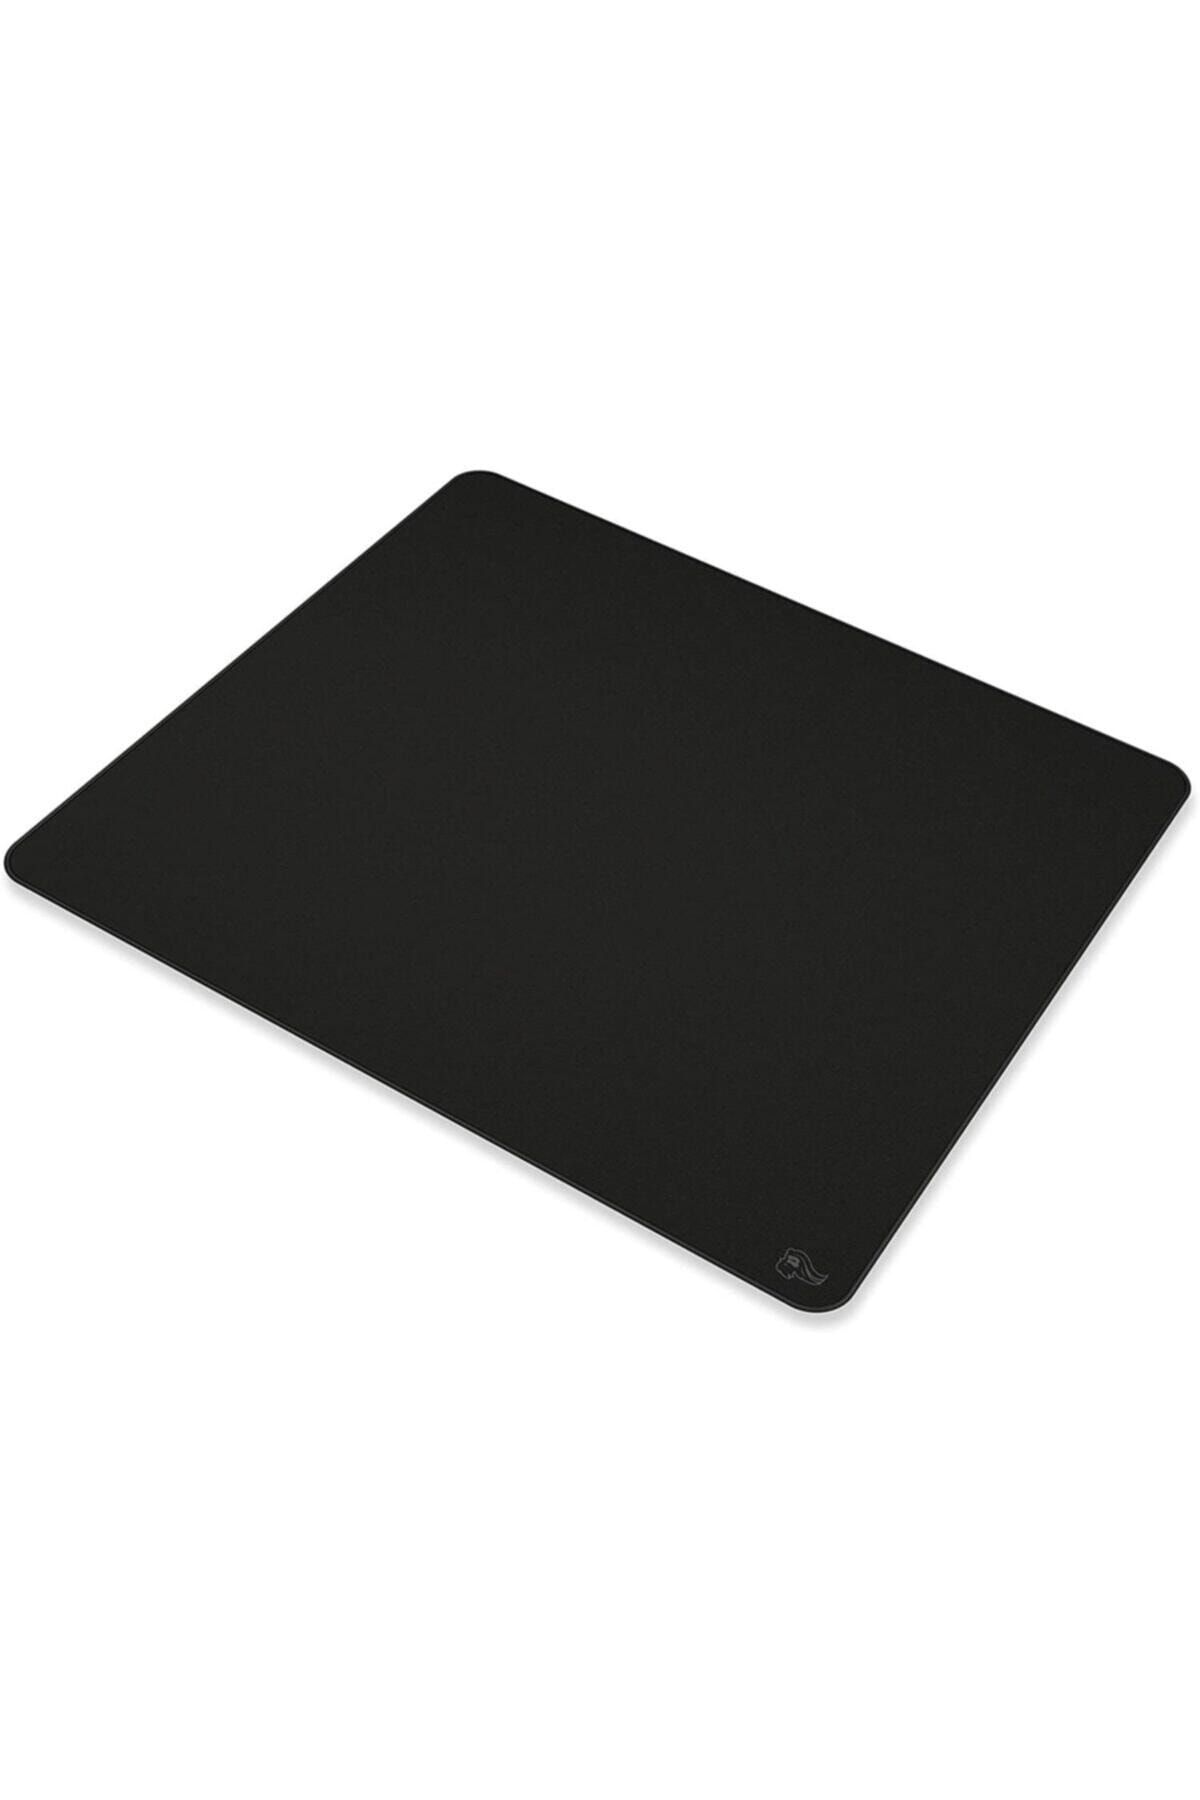 Genel Markalar Heavy Xl Stealth Edition Mousepad 16"x18" (41x46cm)